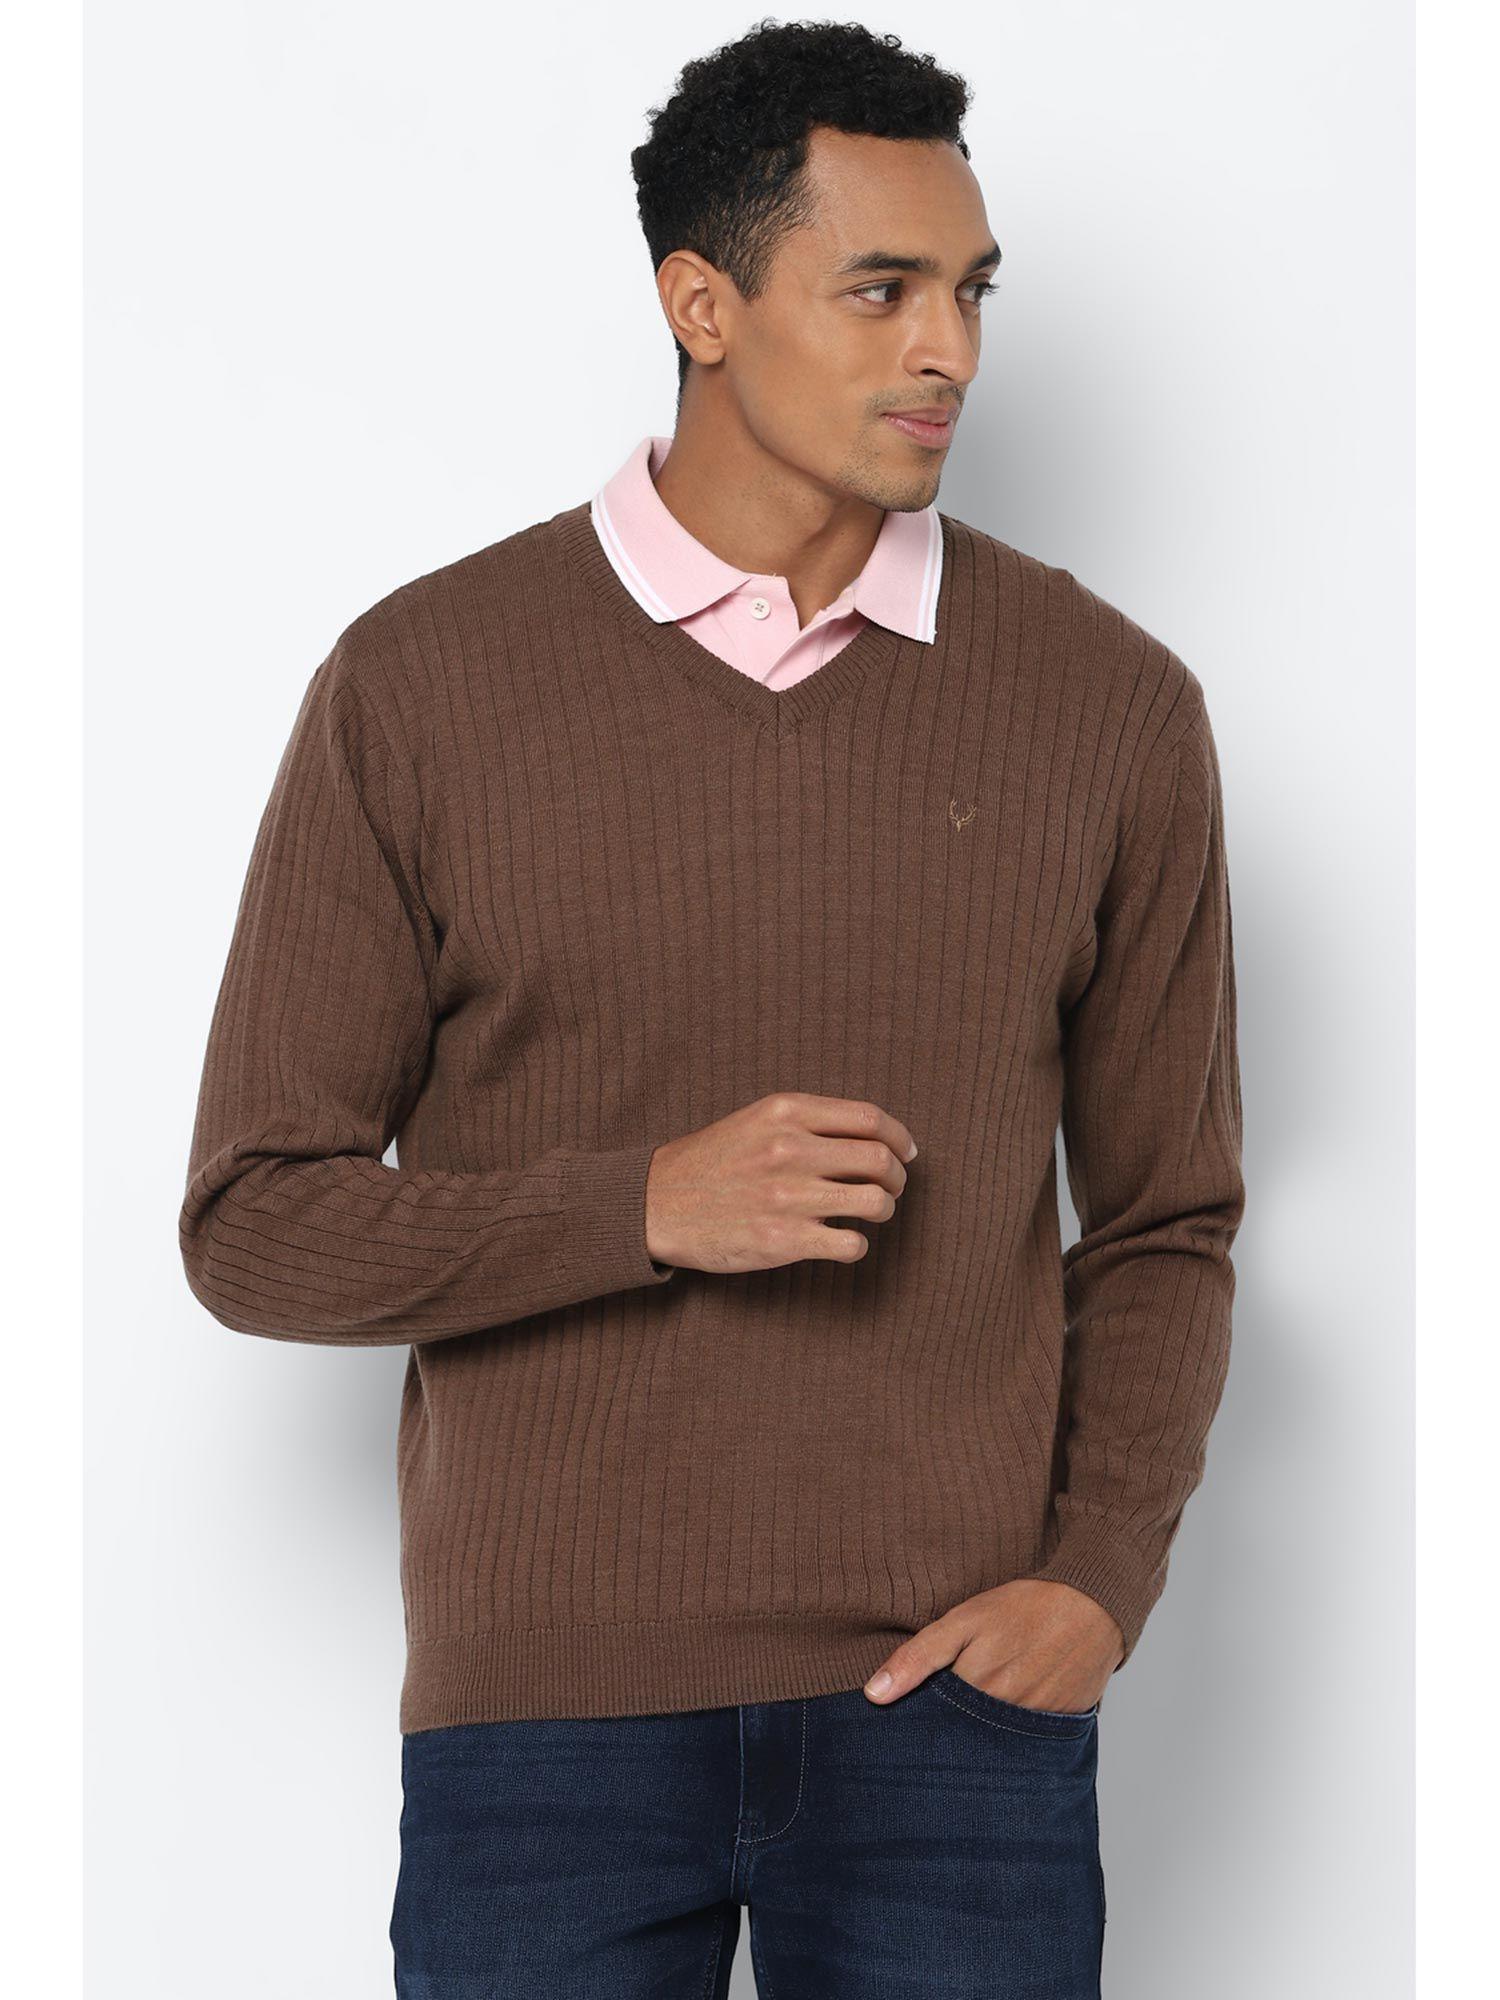 brown-sweater